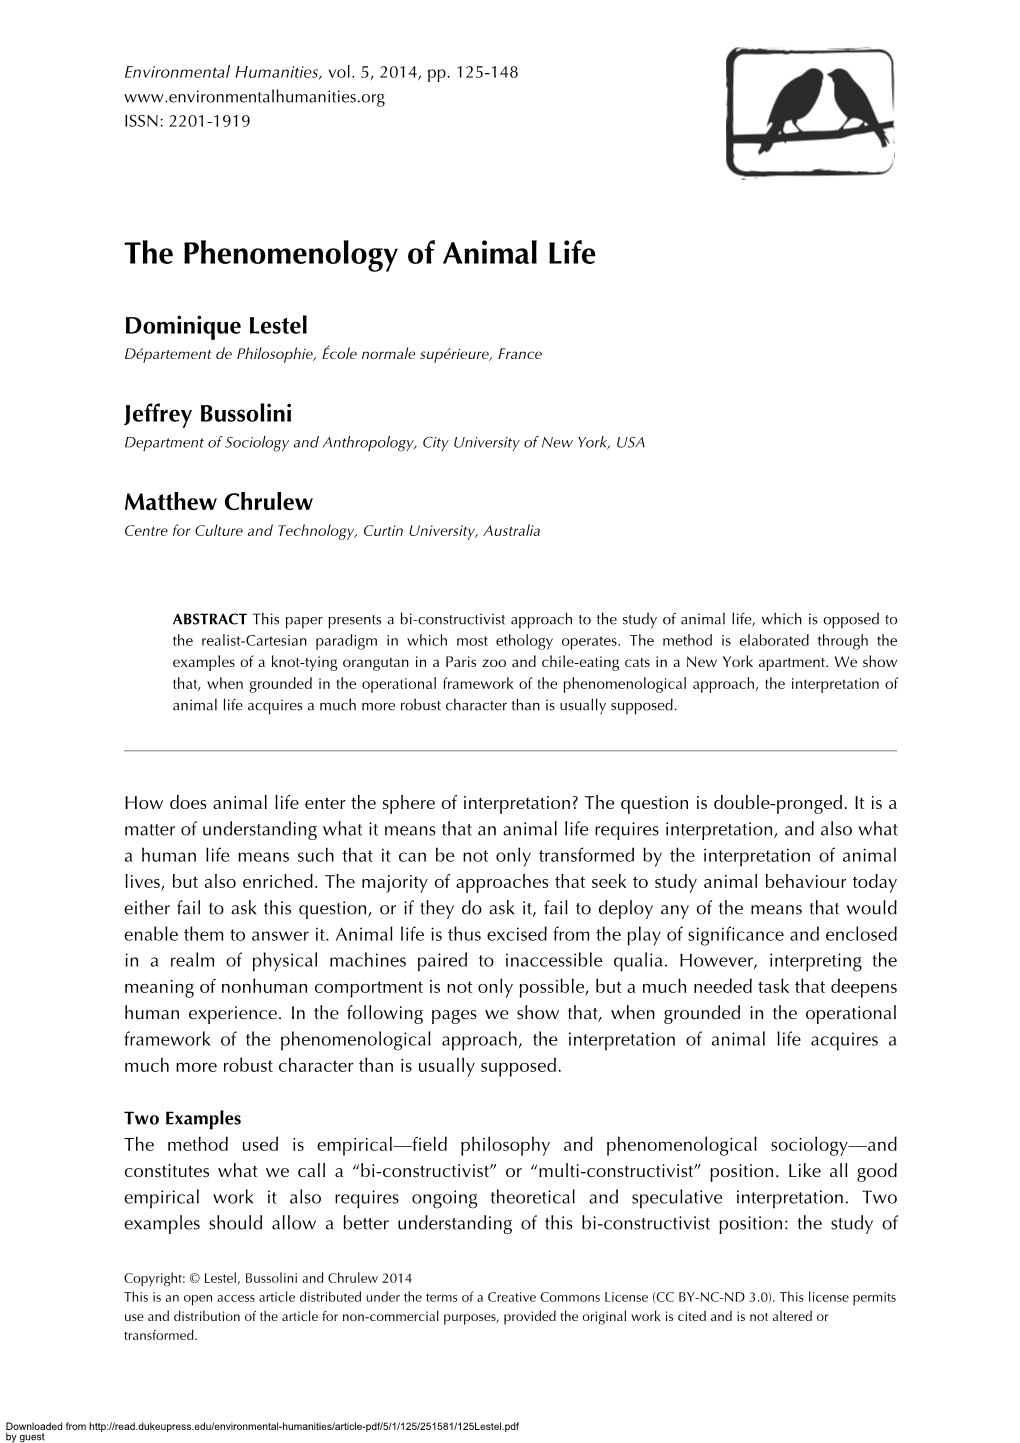 The Phenomenology of Animal Life